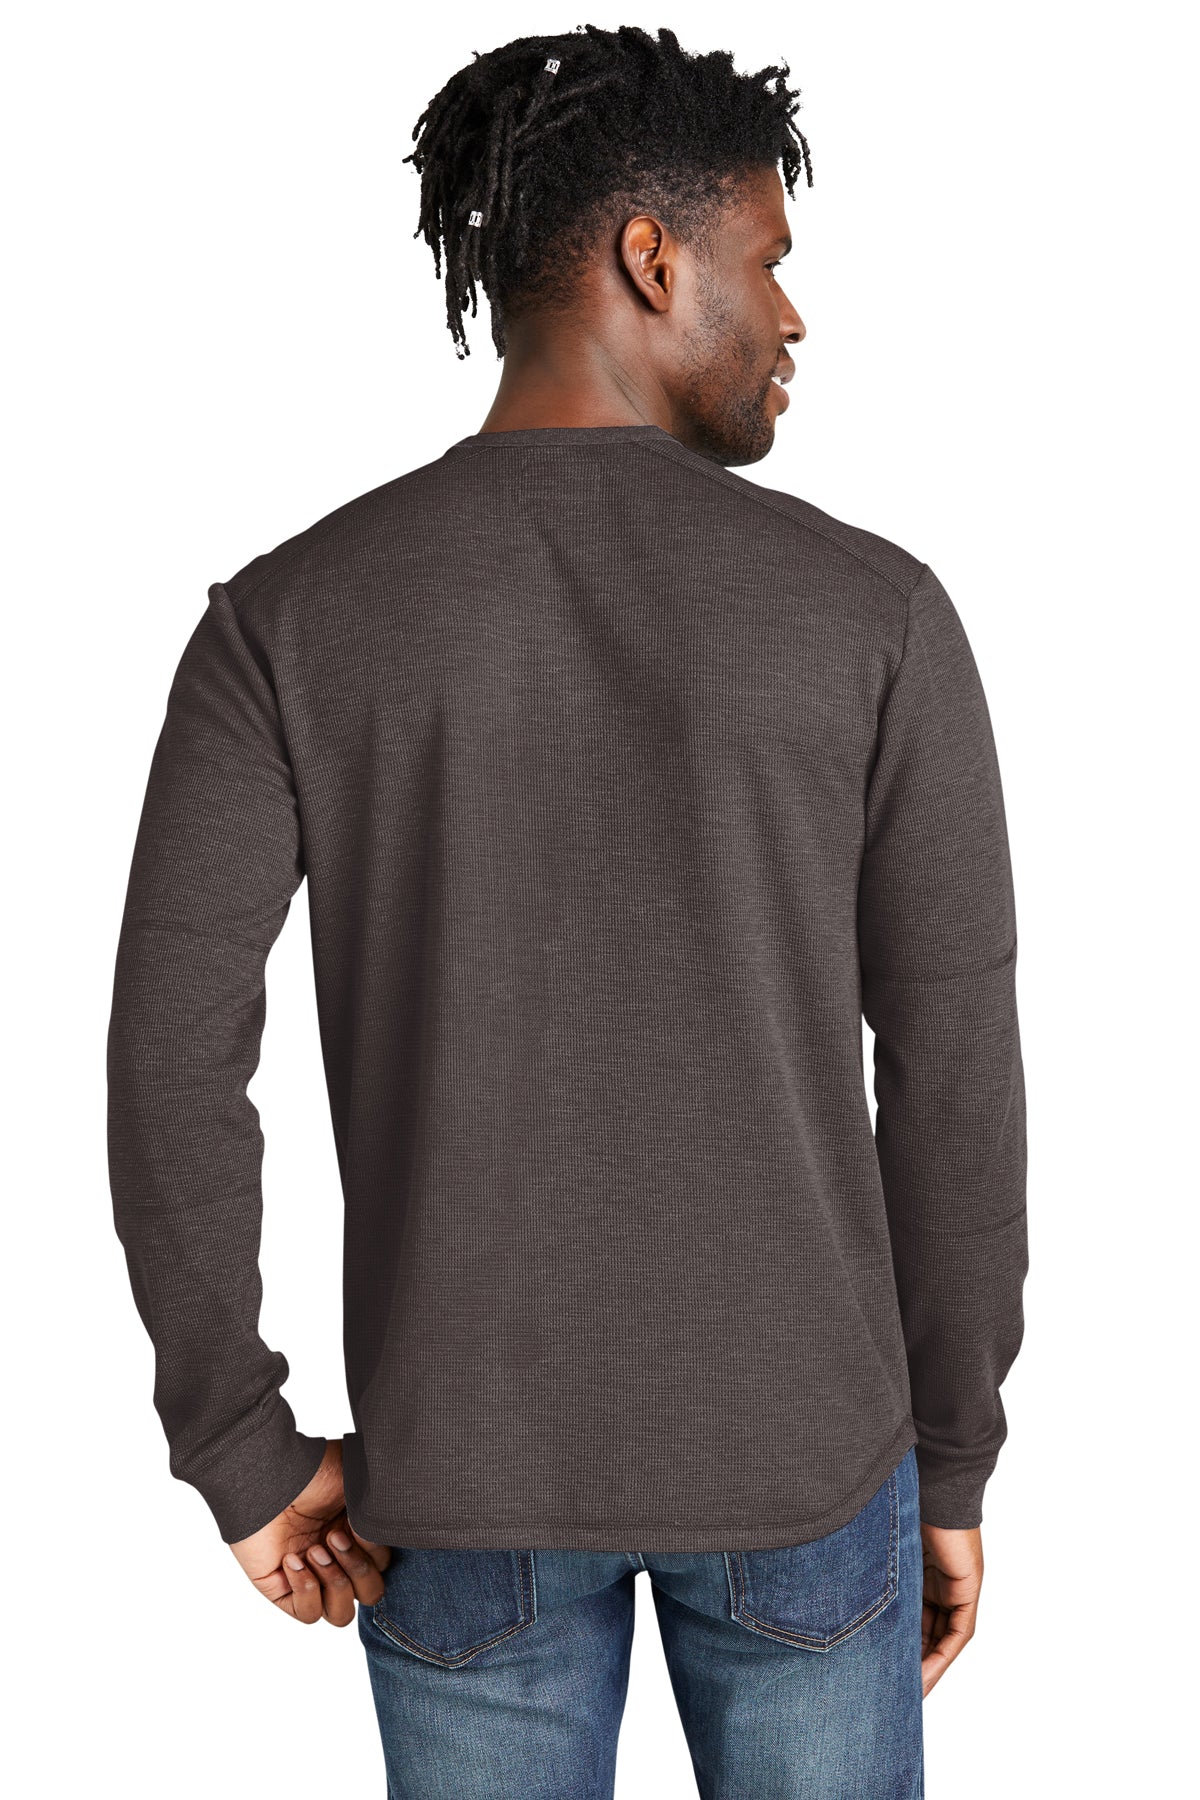 New Era Thermal Long Sleeve Custom T Shirts, Black Heather